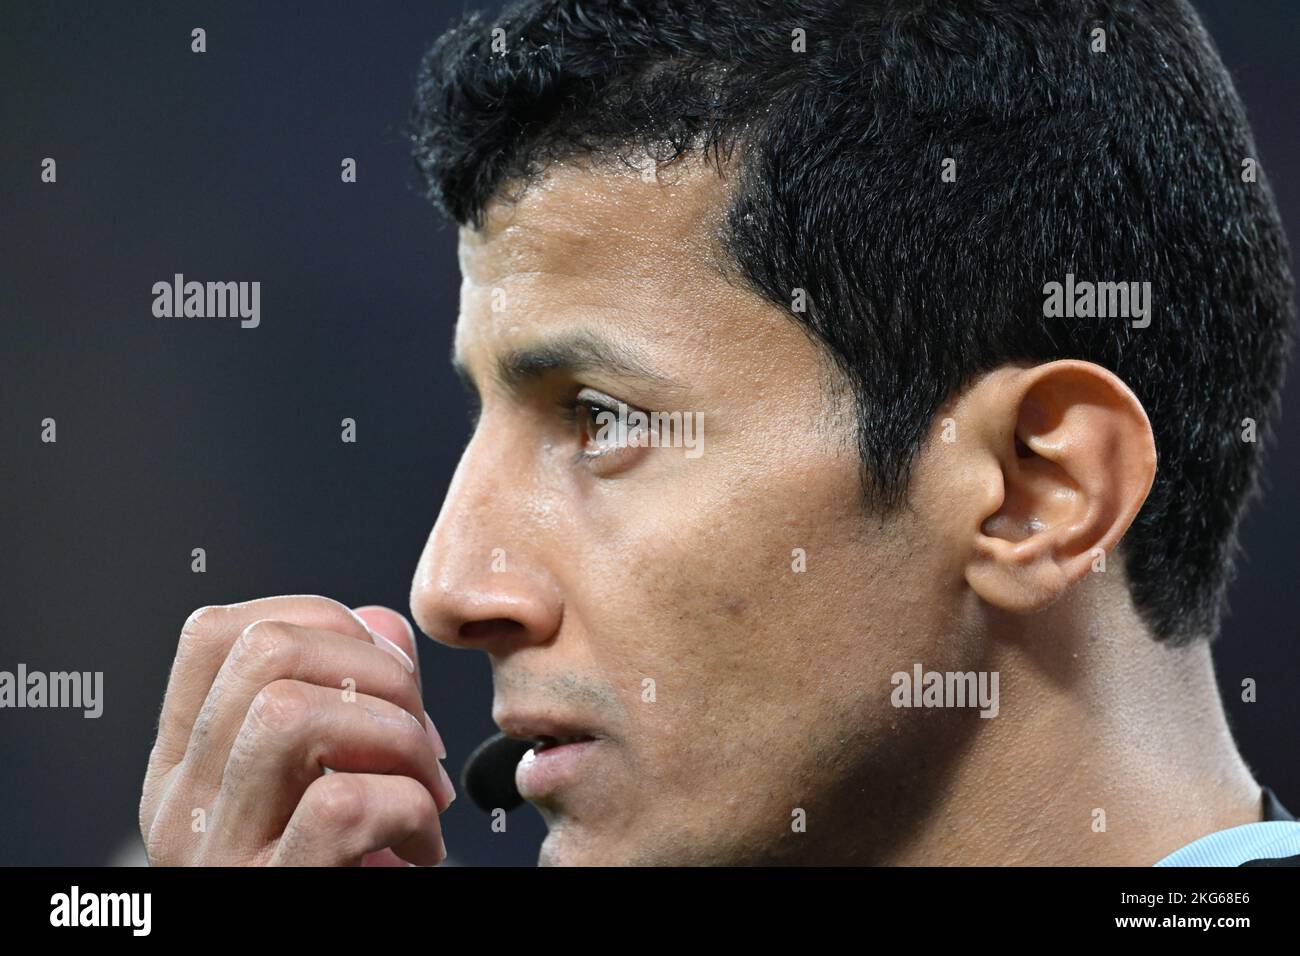 DOHA, Al Rayyan, Qatar. , . referee Abdulrahman Al Jassim Credit: SPP Sport Press Photo. /Alamy Live News Stock Photo